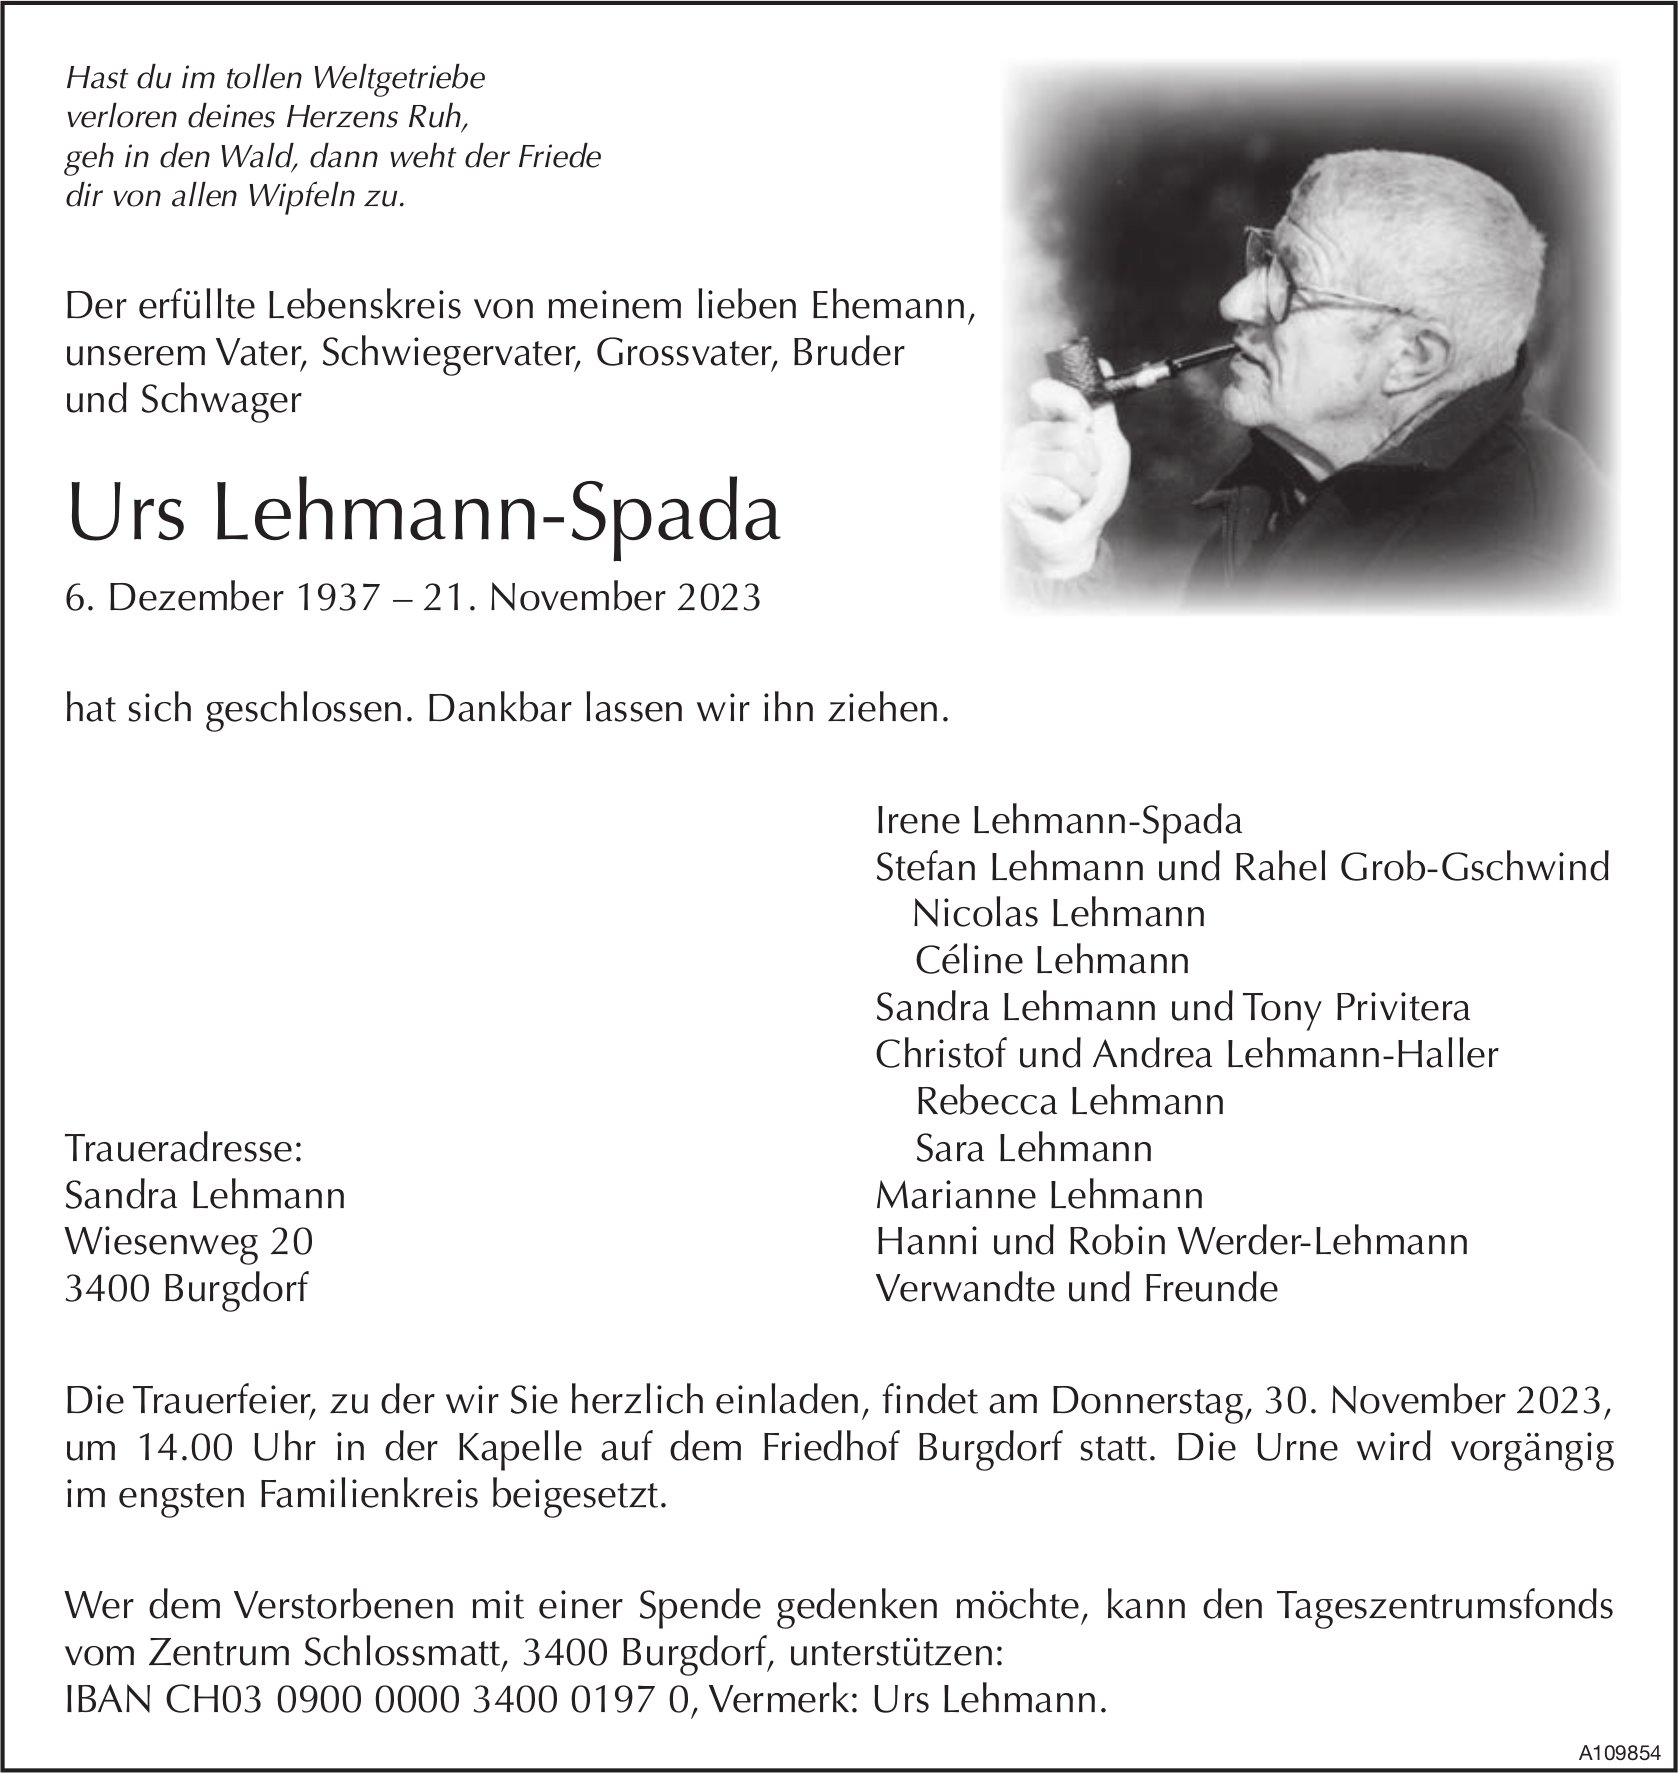 Urs Lehmann-Spada, November 2023 / TA